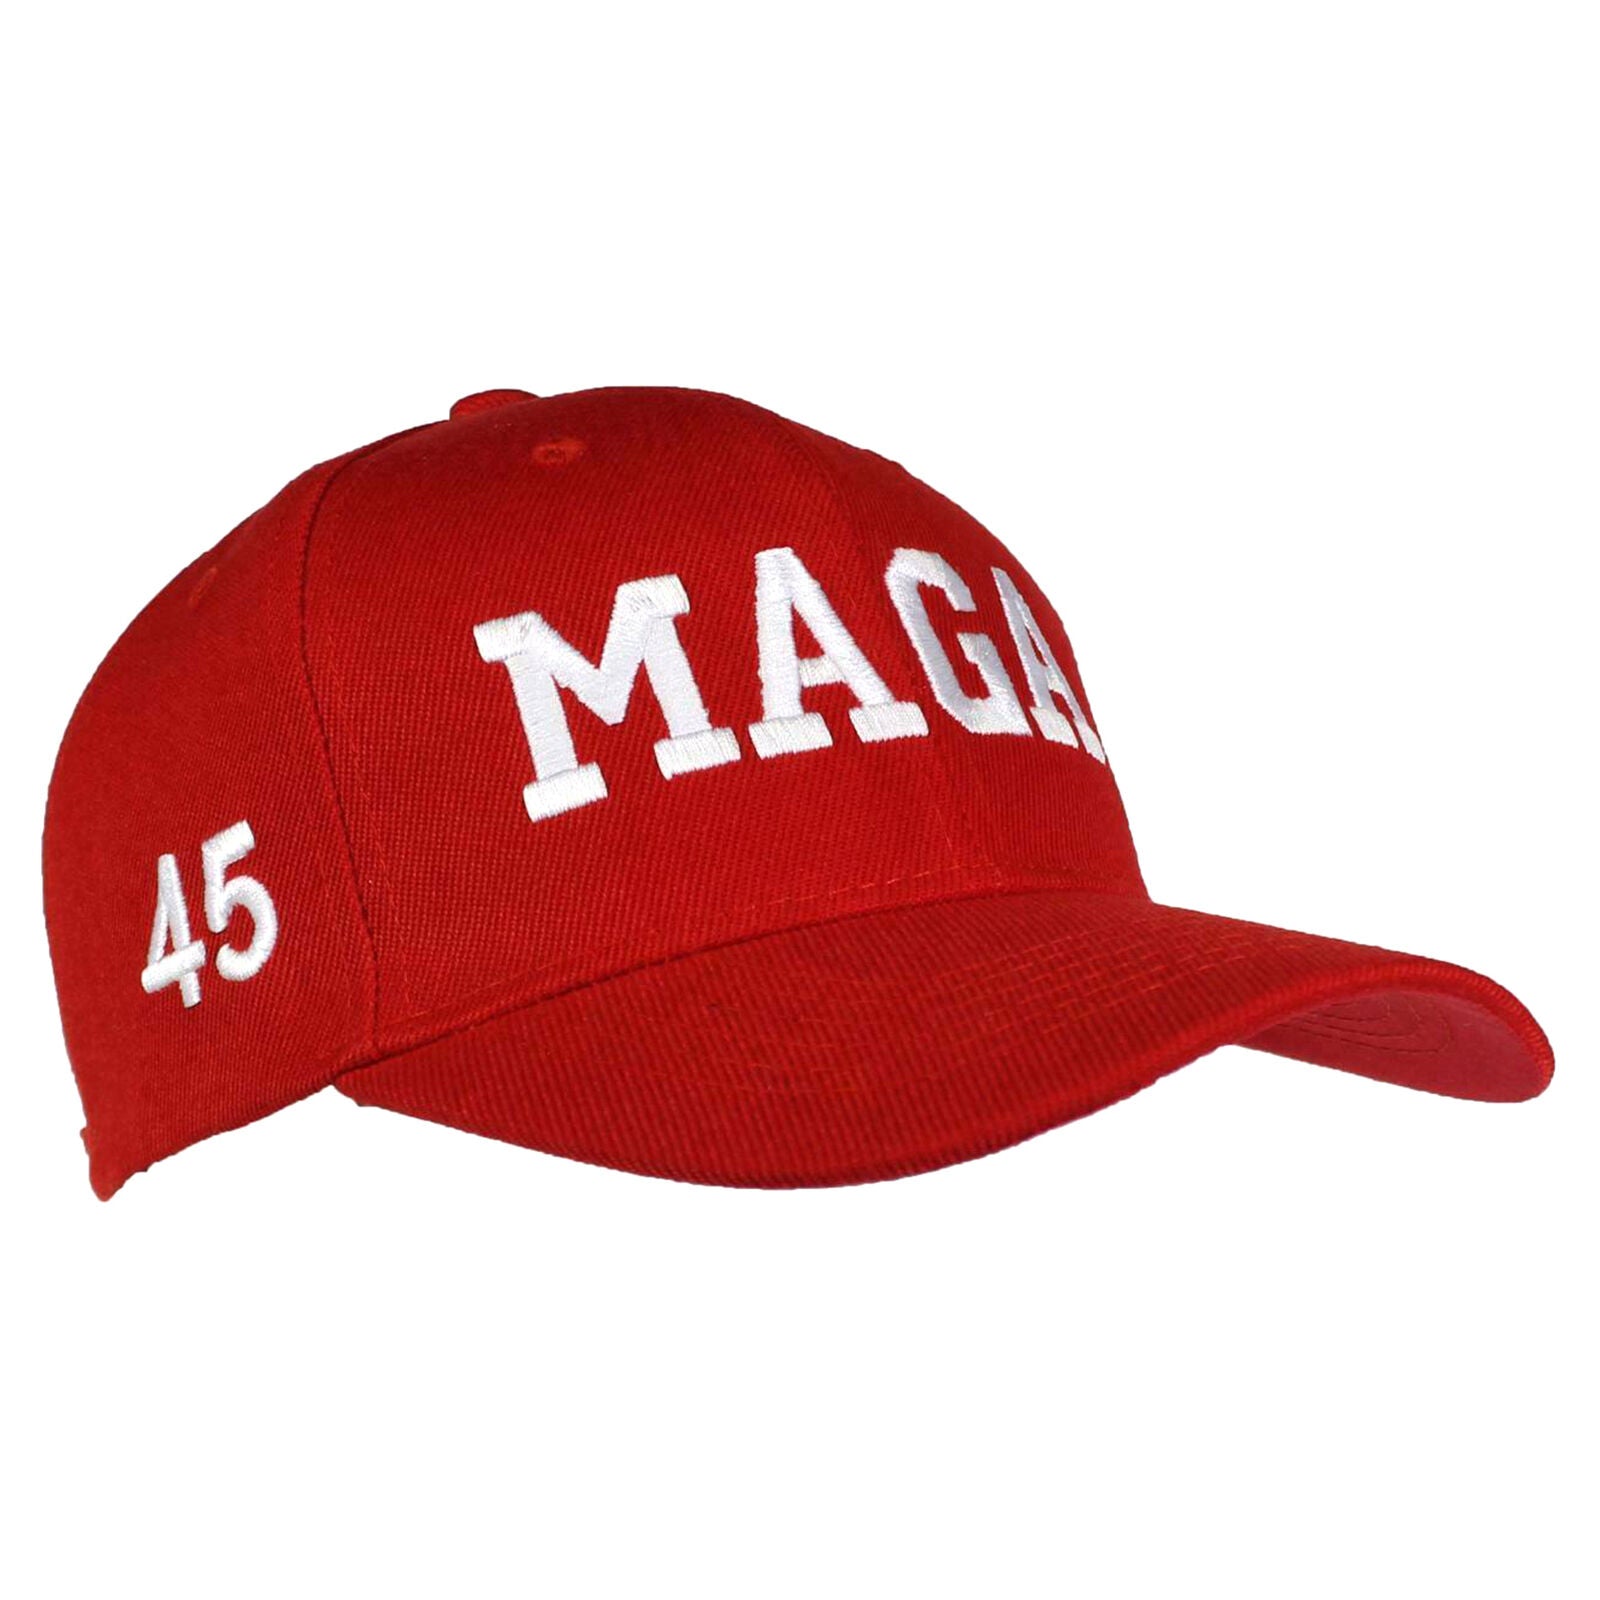 Tropic Hats Embroidered MAGA 45 American Flag Trump Adjustable Ballcap - Red